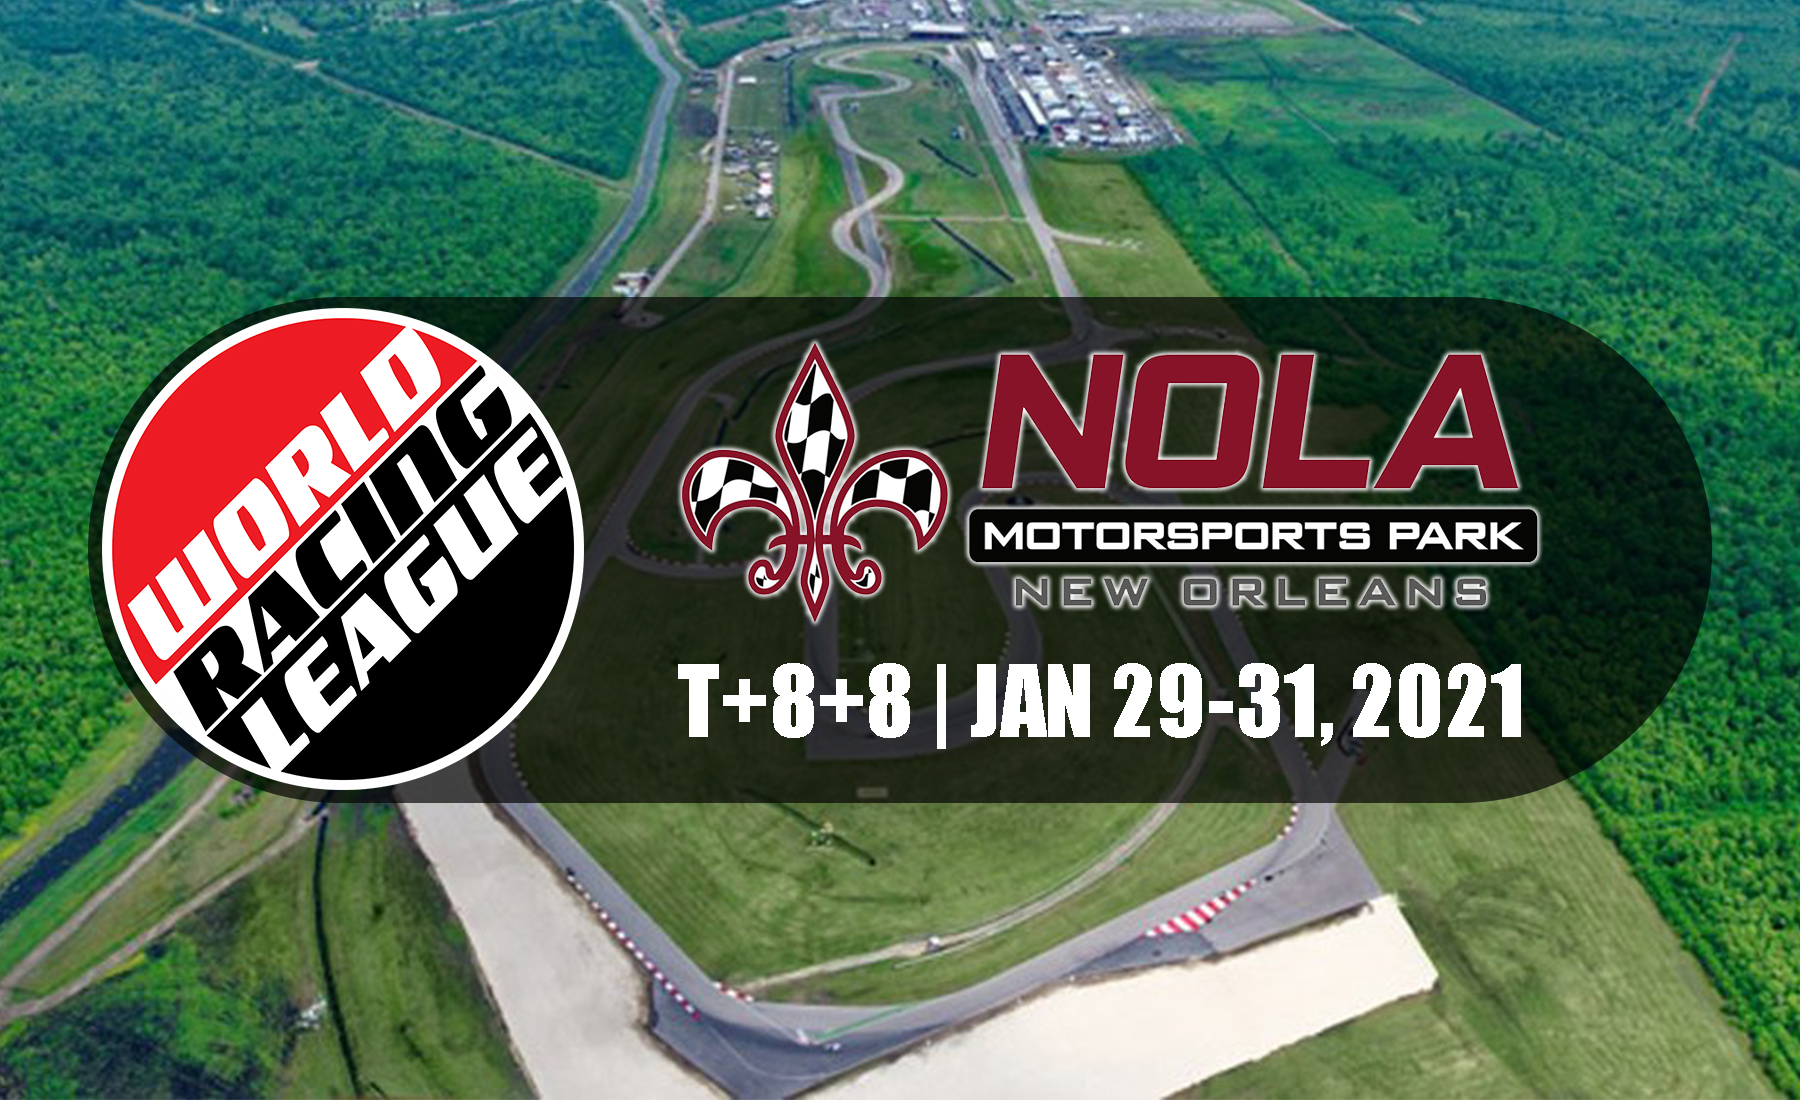 NOLA World Racing League NOLA Motorsports Park